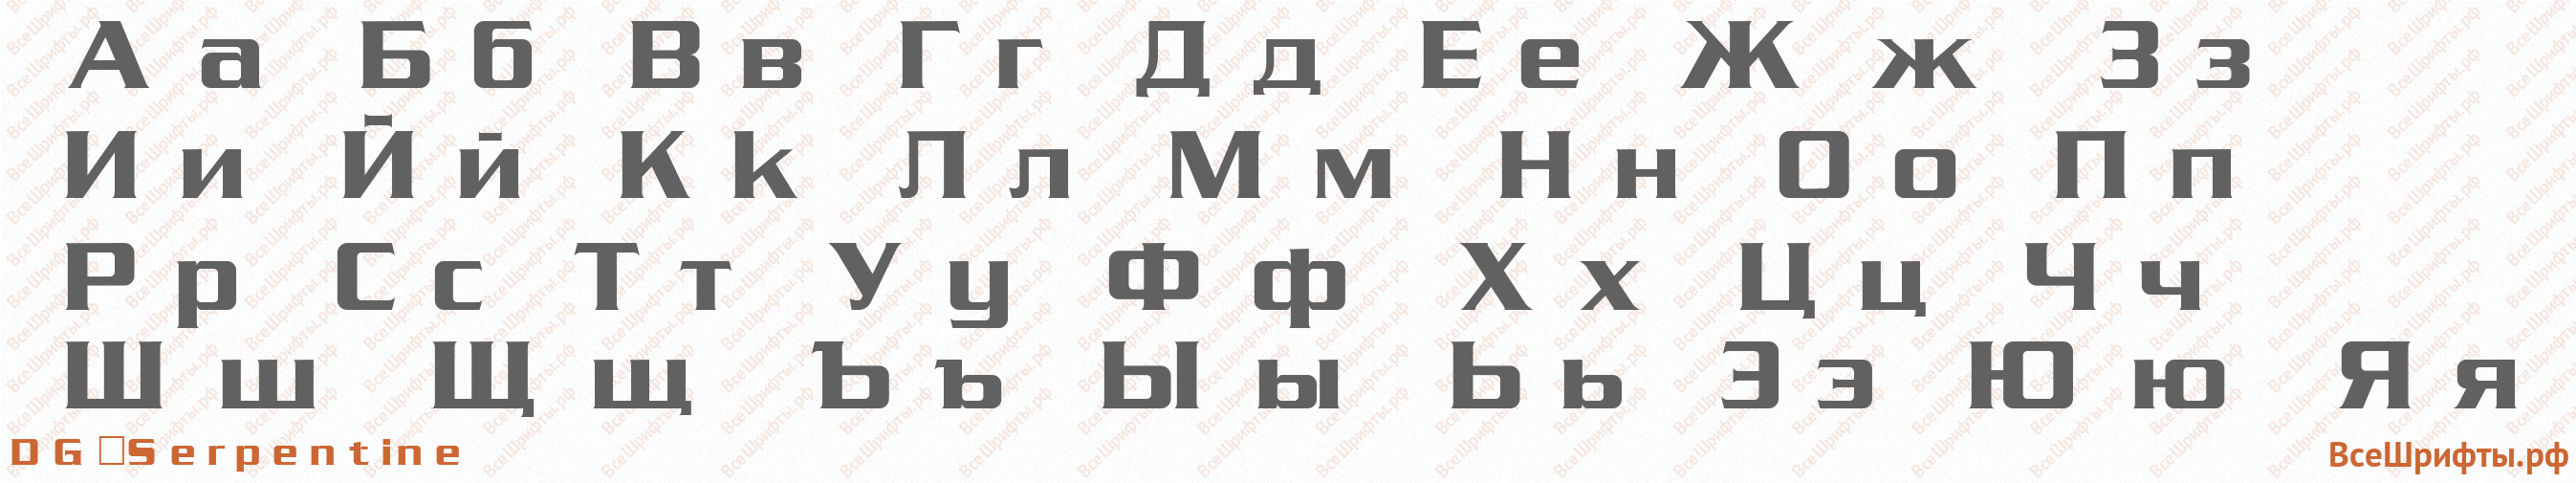 Шрифт DG_Serpentine с русскими буквами